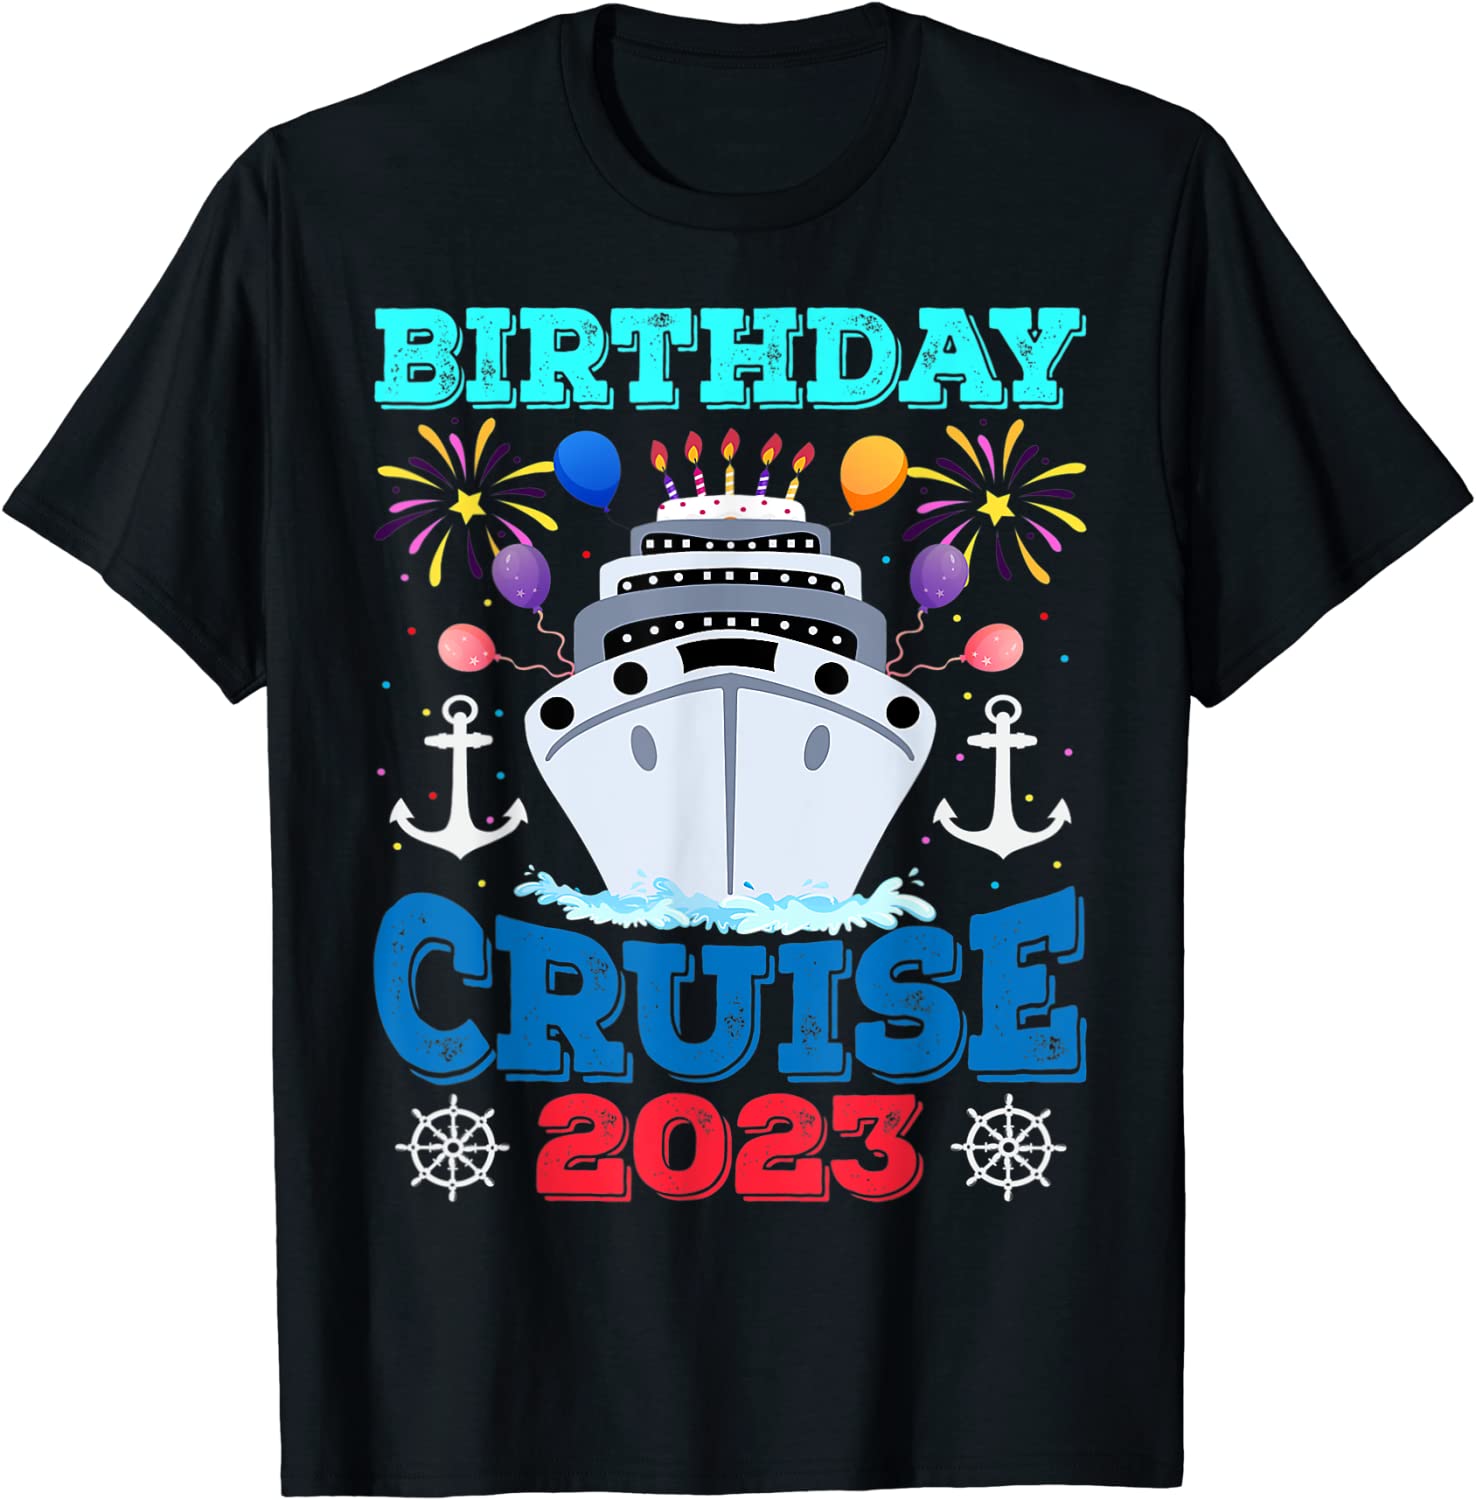 Birthday Cruise Squad Shirt Birthday Party Cruise Squad 2023 Funny Shirts